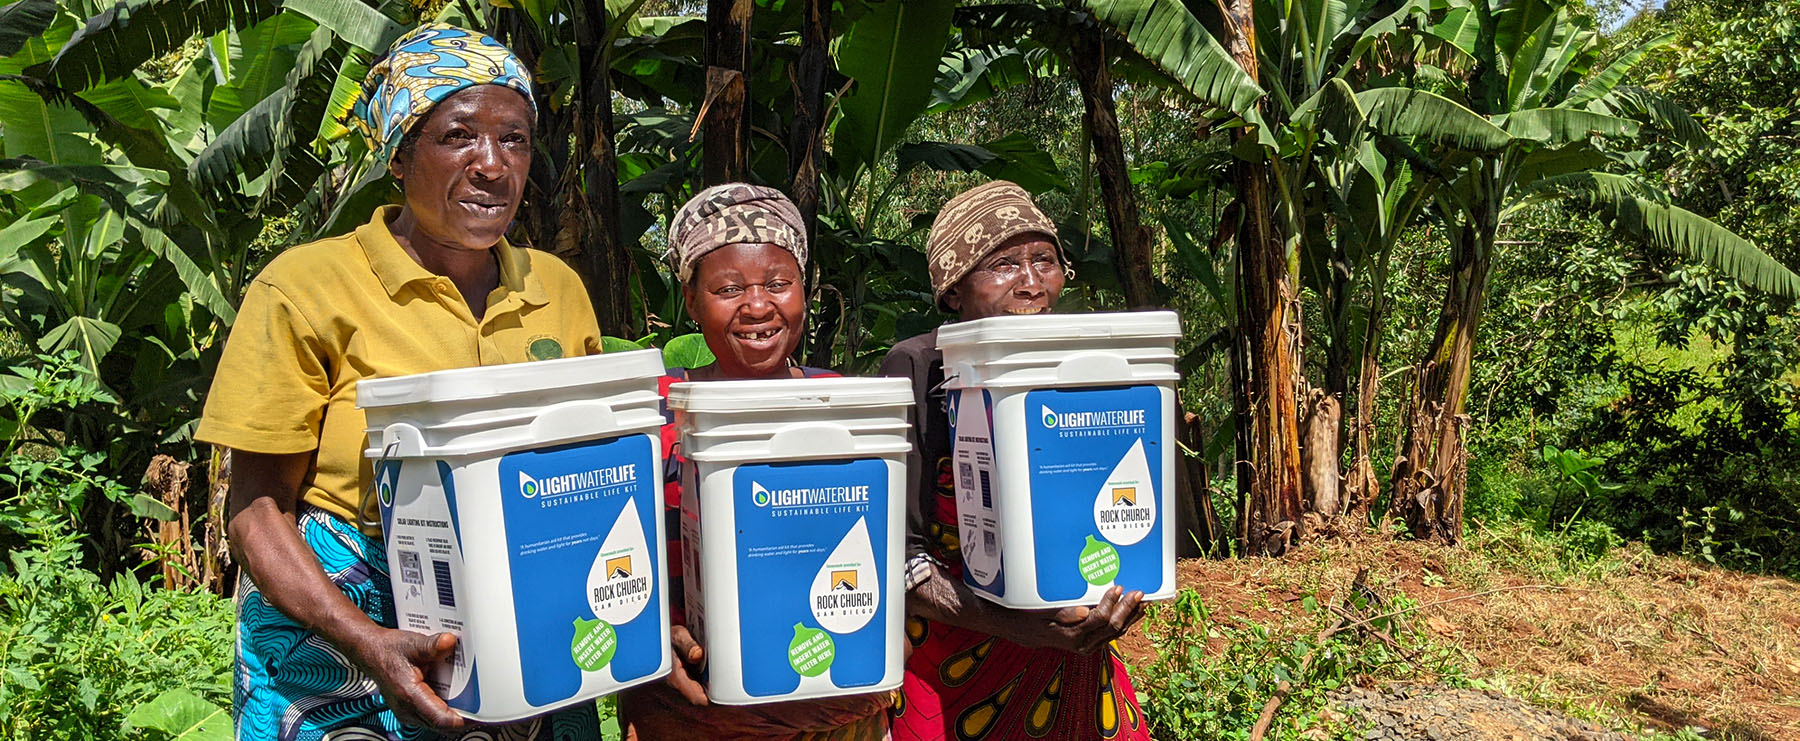 LightWaterLife Congo humanitarian aid kits